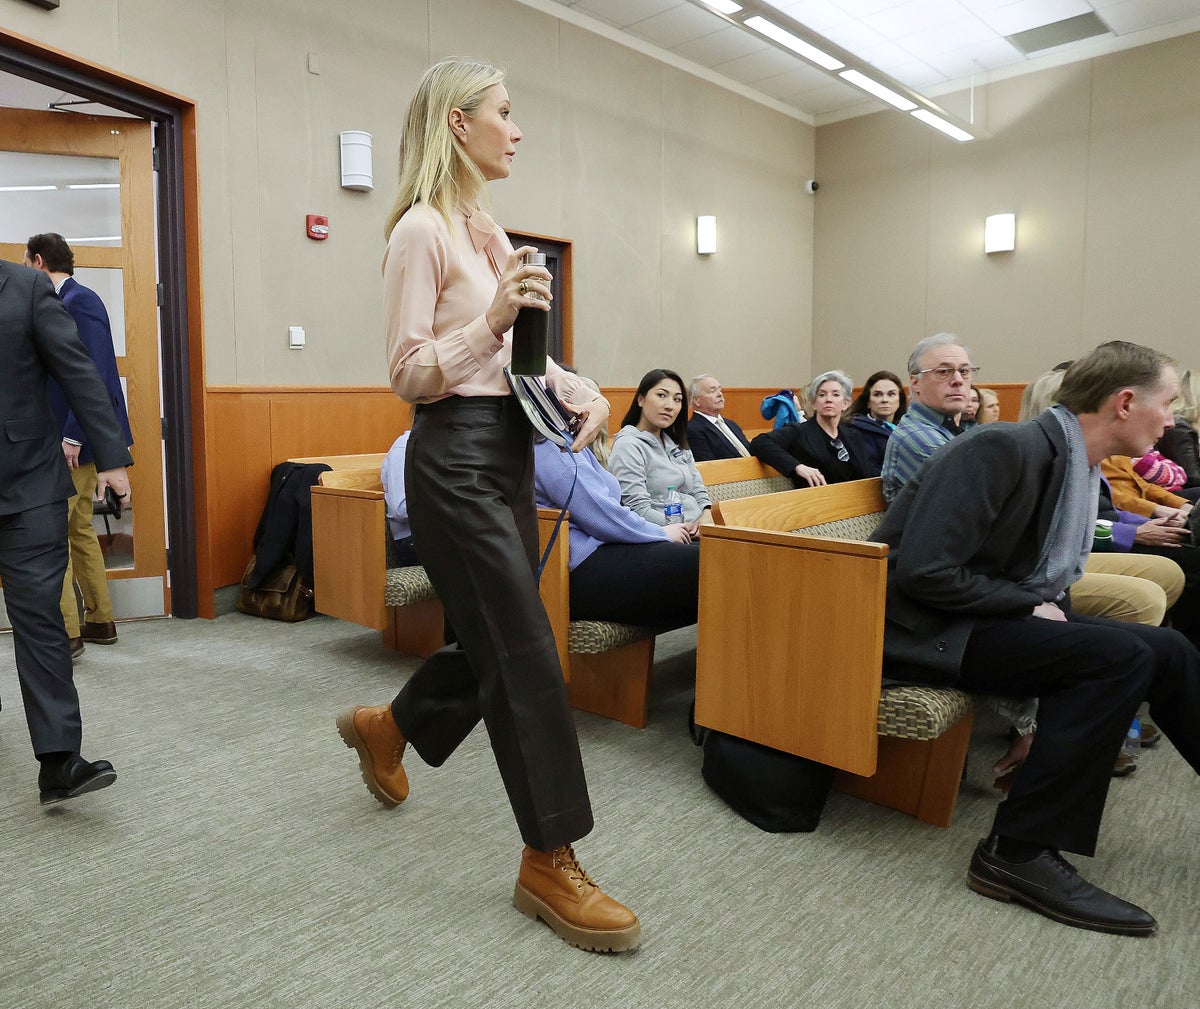 Gwyneth Paltrow’s ski collision trial continues with defense